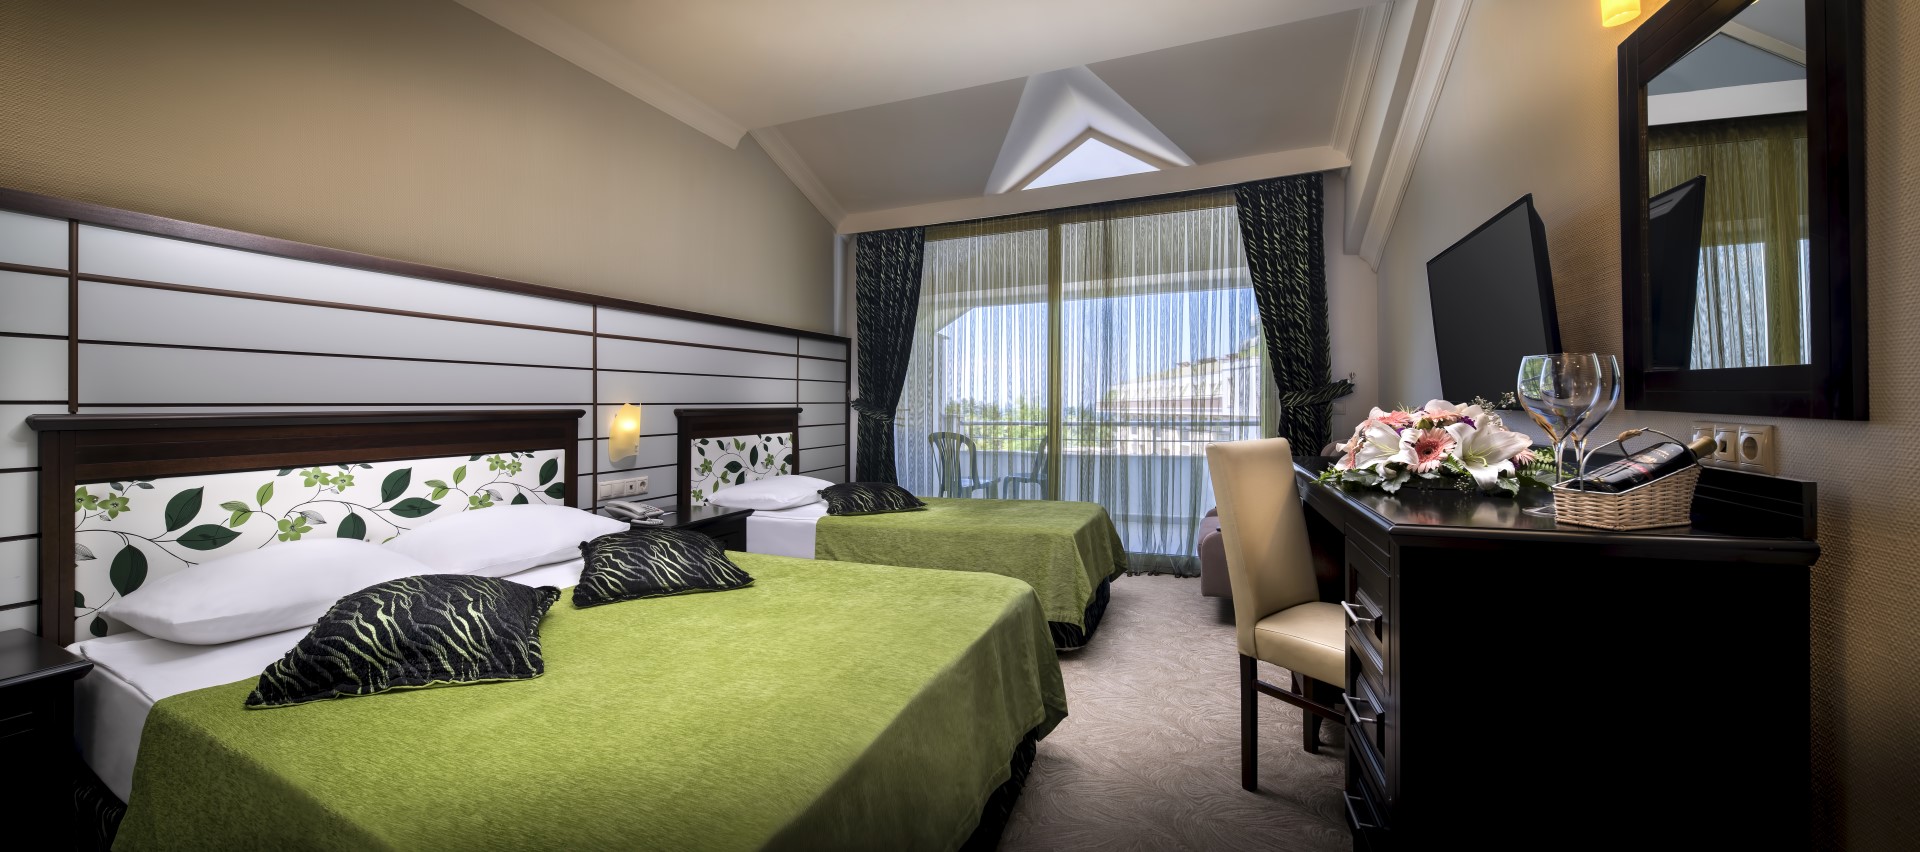 Rox Royal Hotel Deniz Manzaralı  Standart Oda  